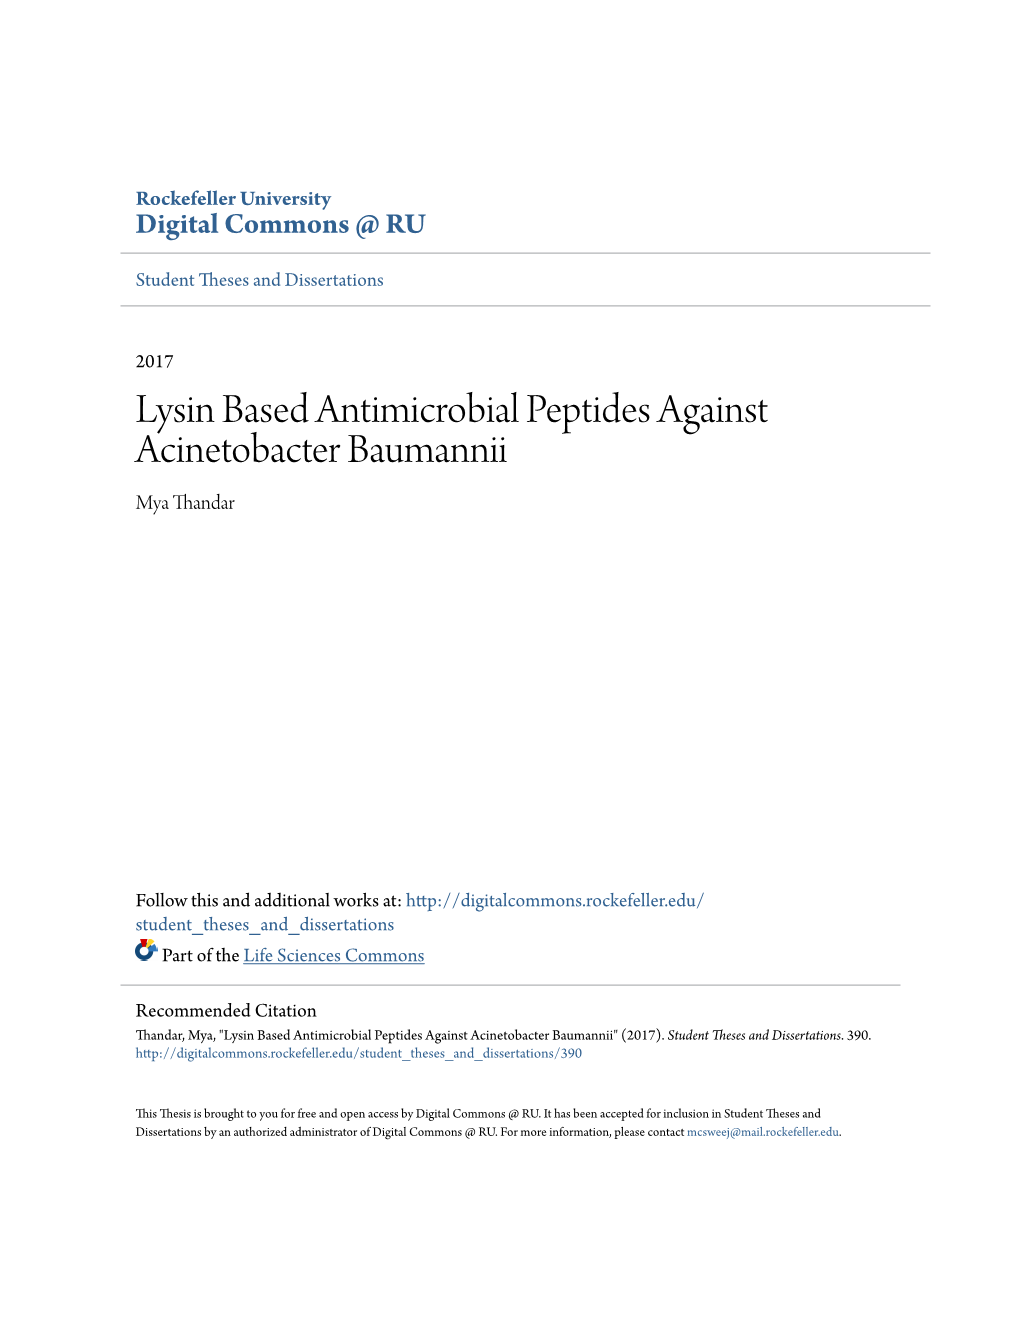 Lysin Based Antimicrobial Peptides Against Acinetobacter Baumannii Mya Thandar